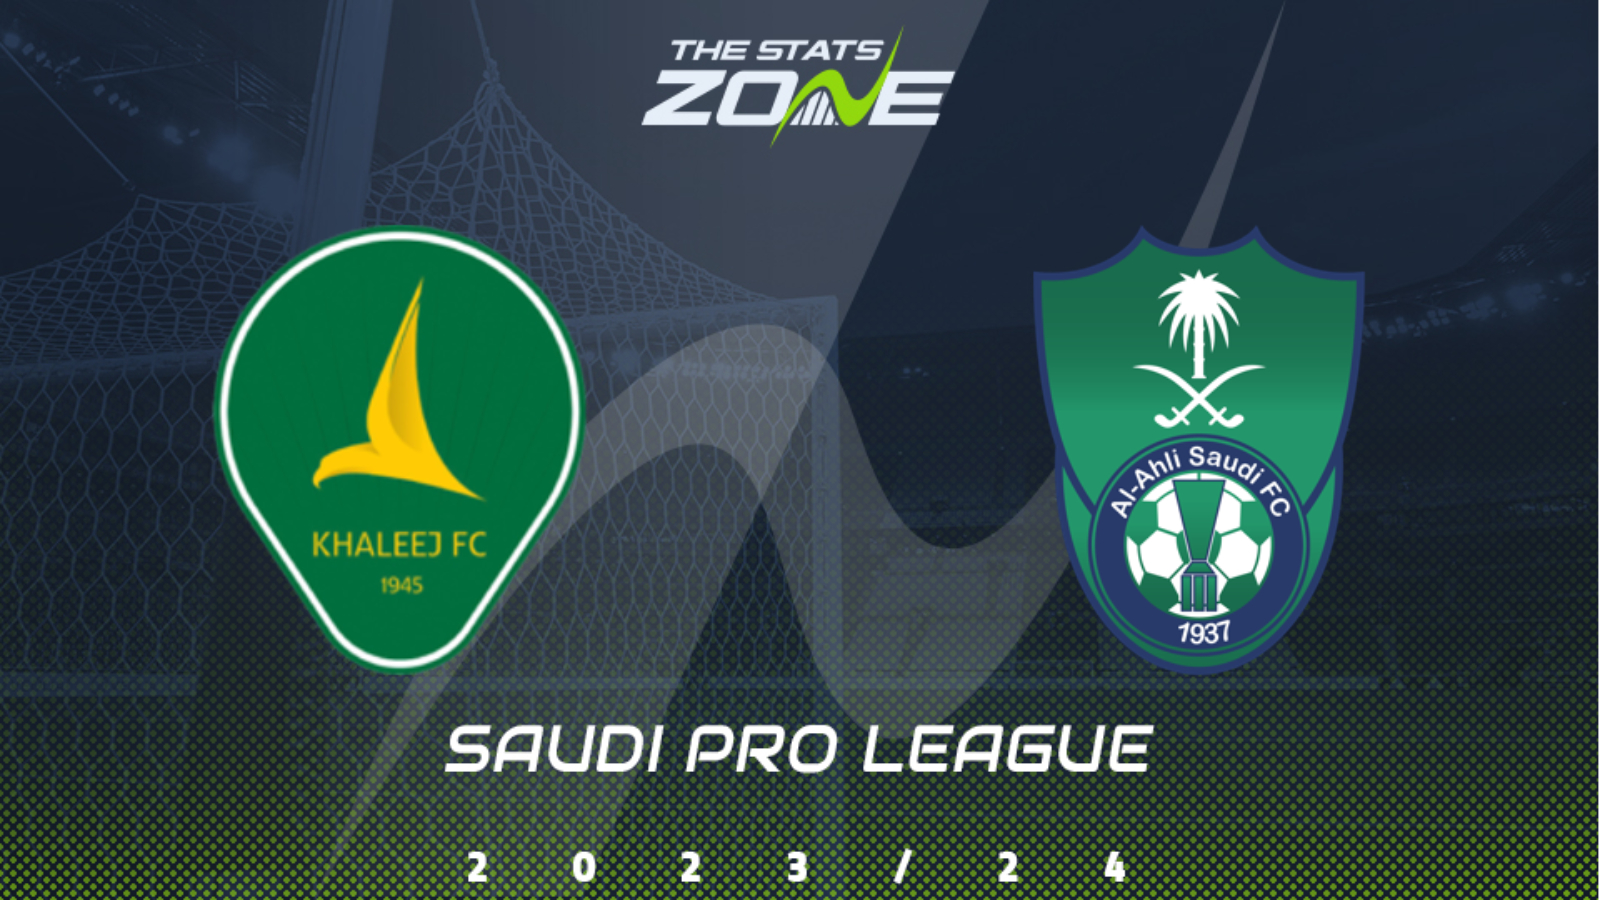 Saudi pro league. Saudi Pro League logo без фона. Roshn Saudi Pro League background. Saudi Pro League logo PNG.